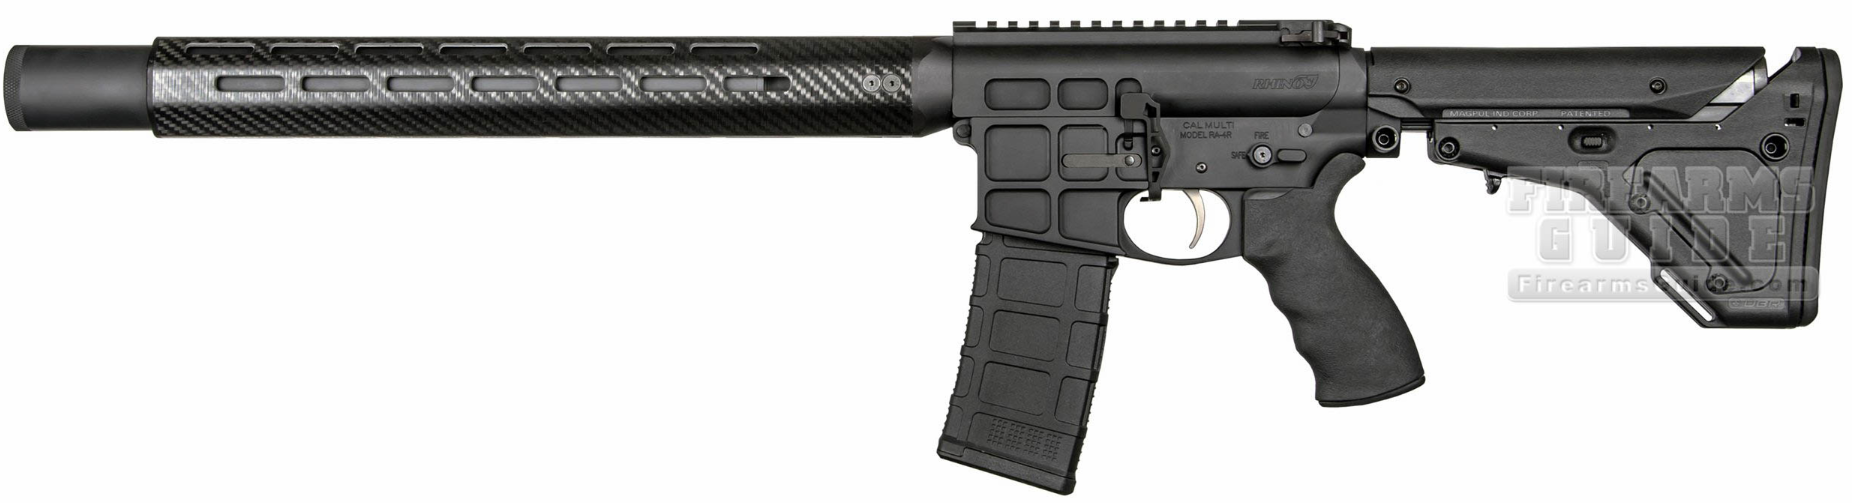 Rhino Arms Integrally Suppressed Carbine